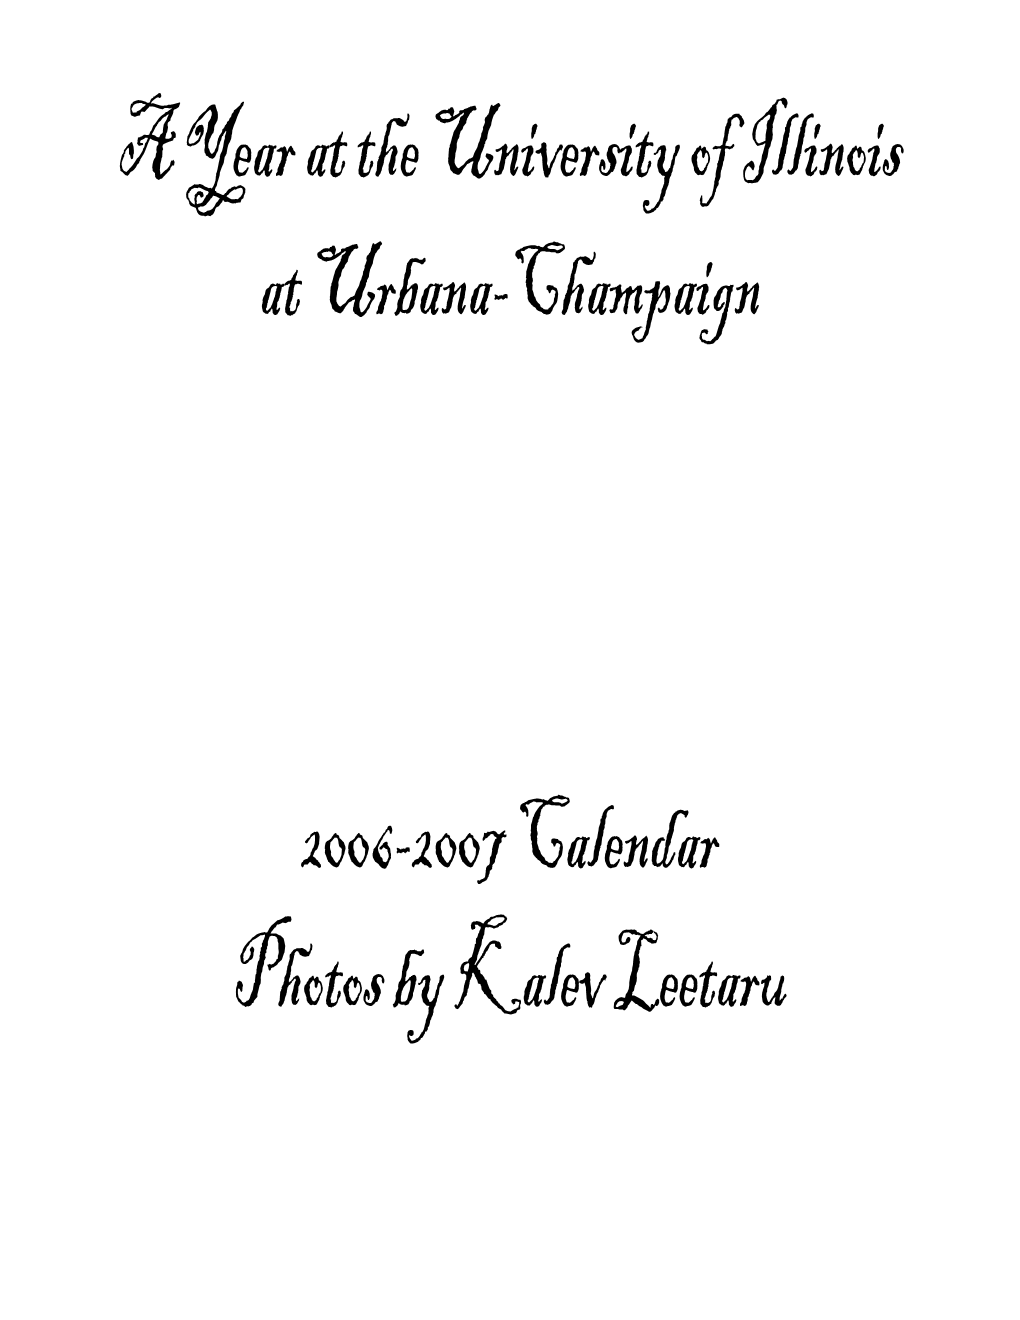 December 2007 Campus Calendar